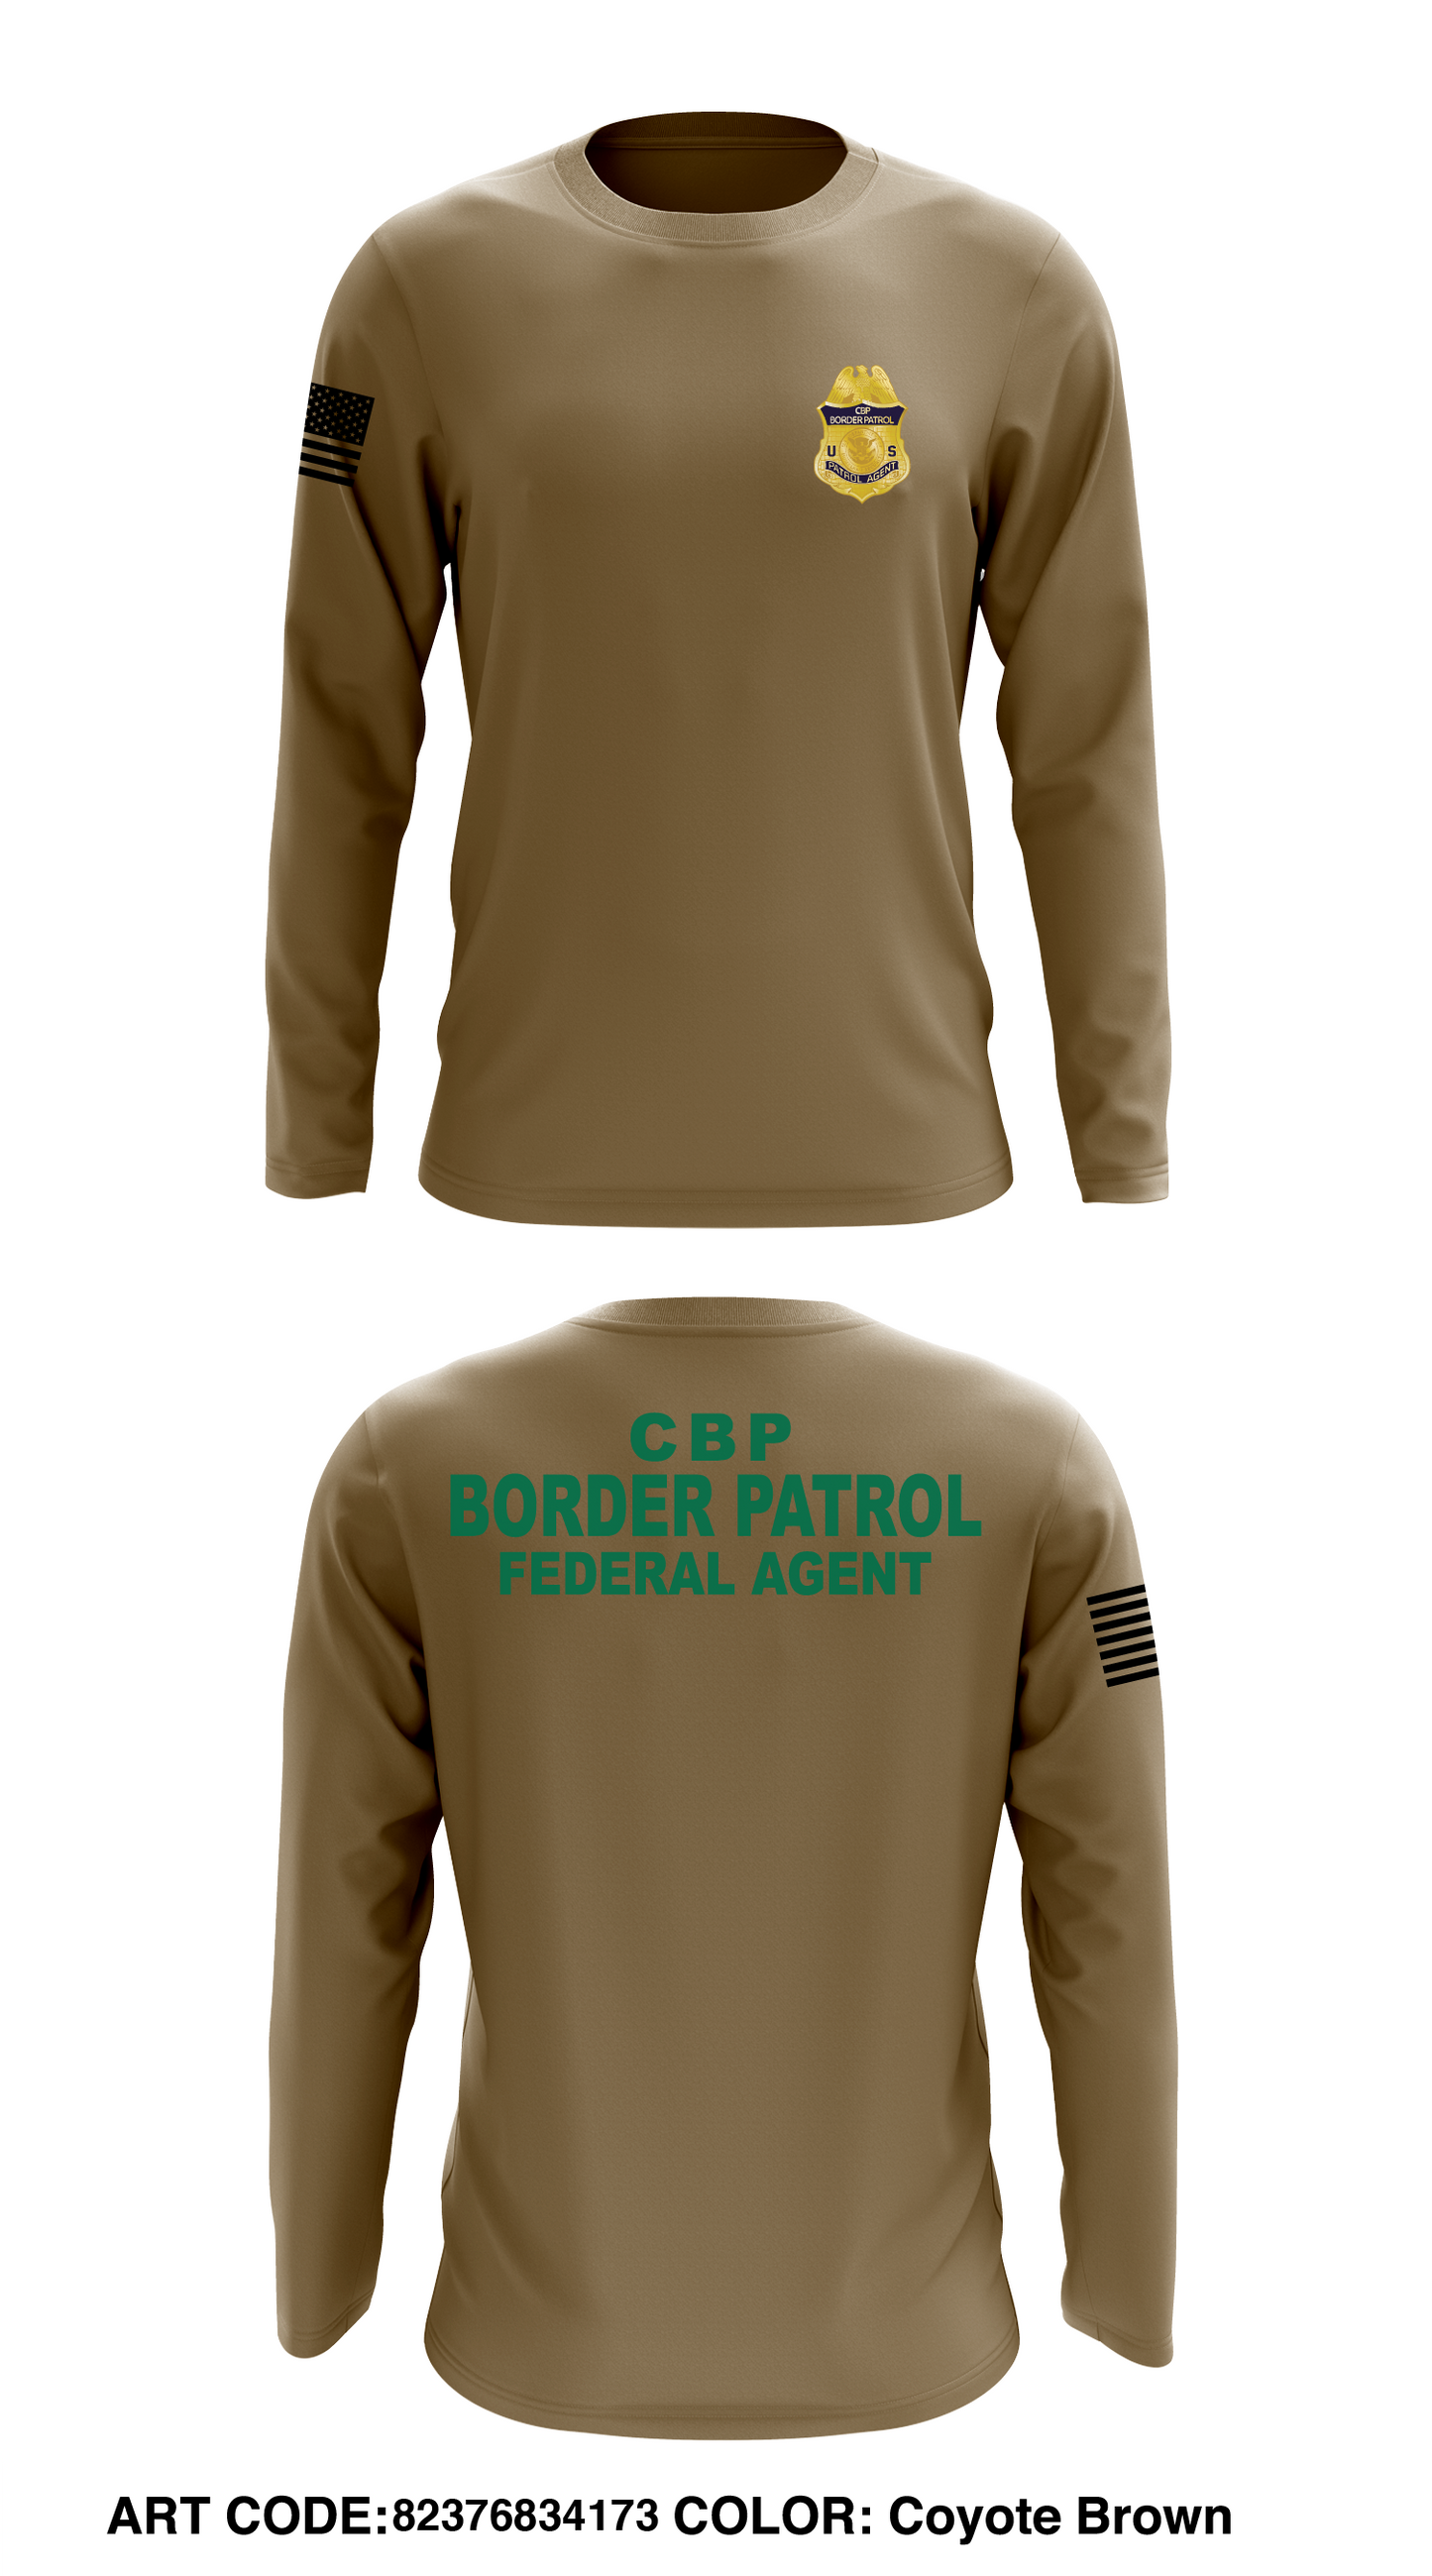 U.S. Border Patrol Store 1 Core Men's LS Performance Tee